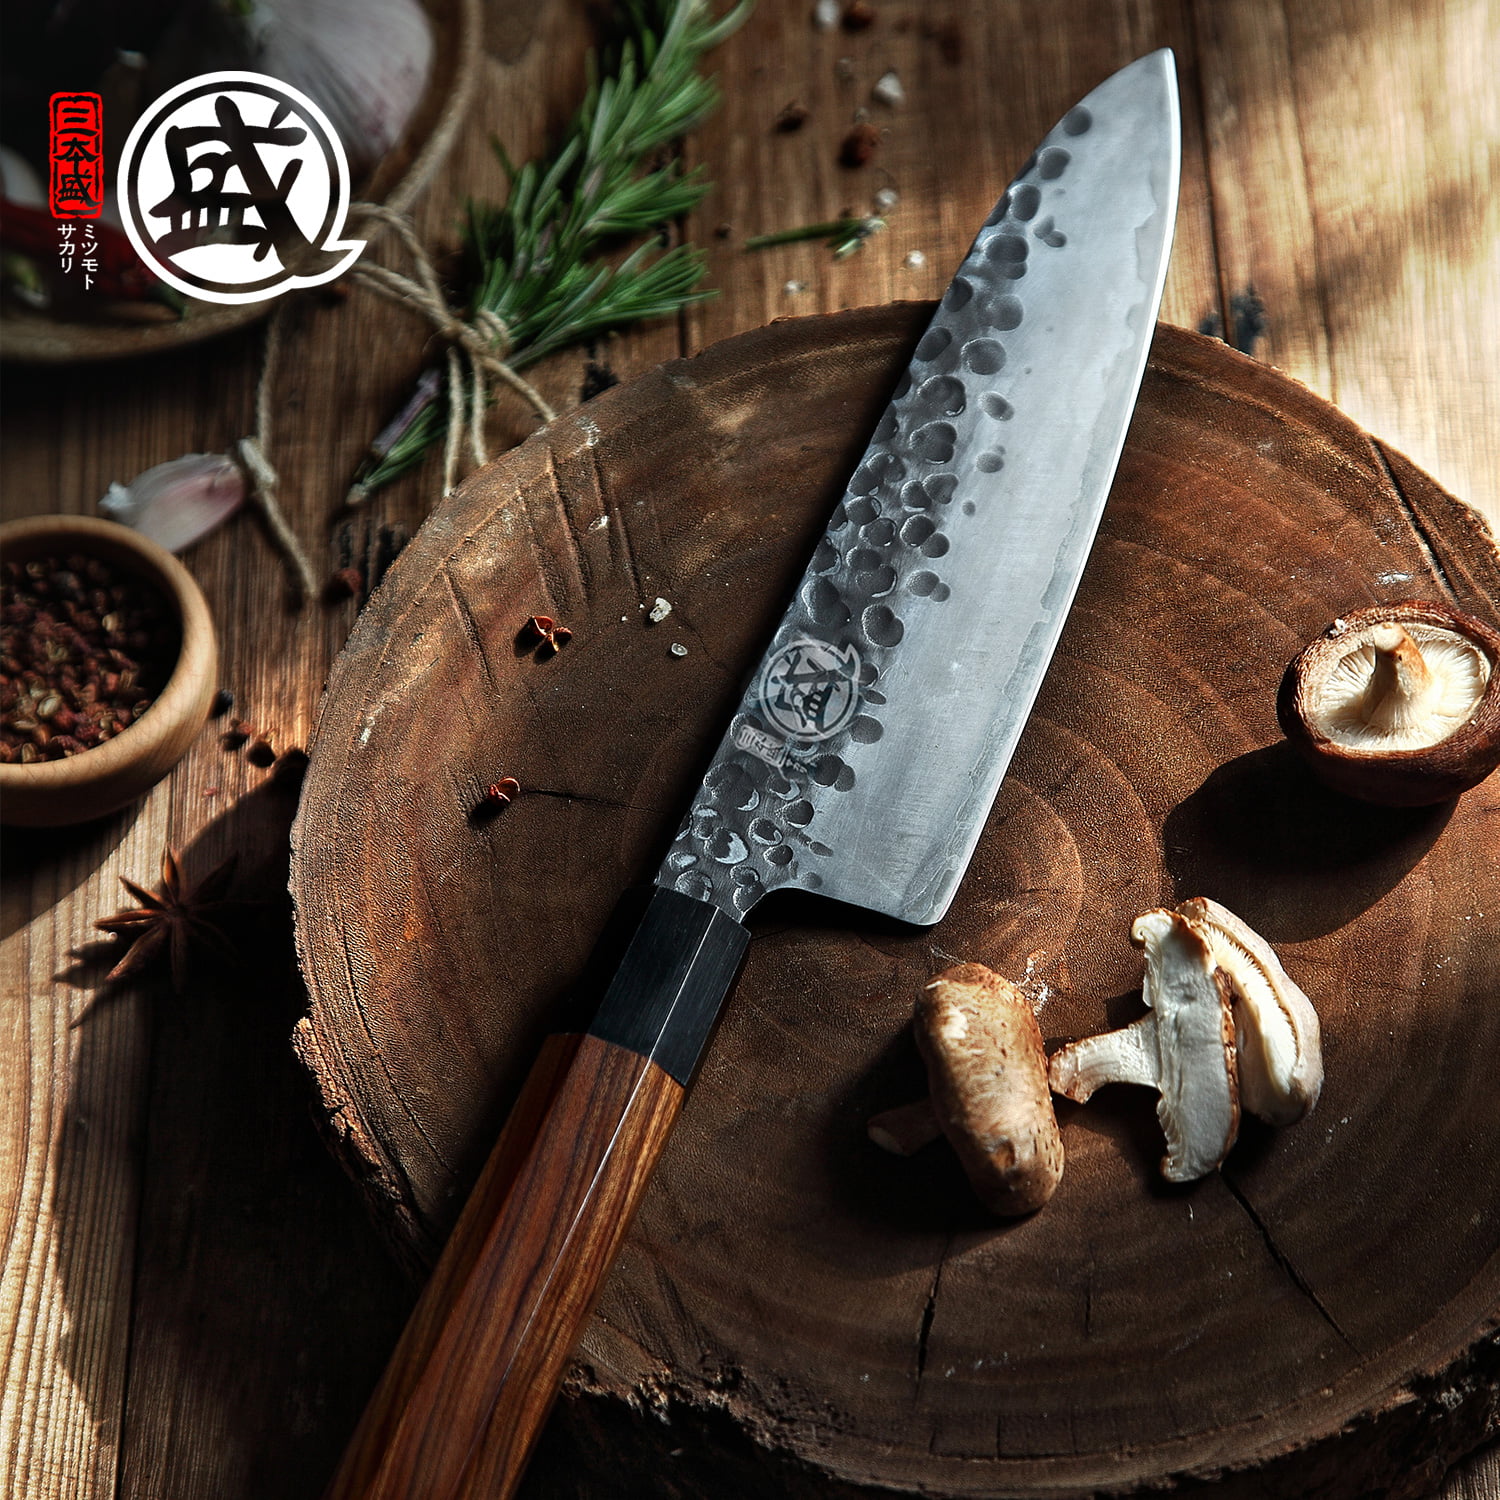 MITSUMOTO SAKARI Damascus Chef Knife, 8 inch Professional 440C